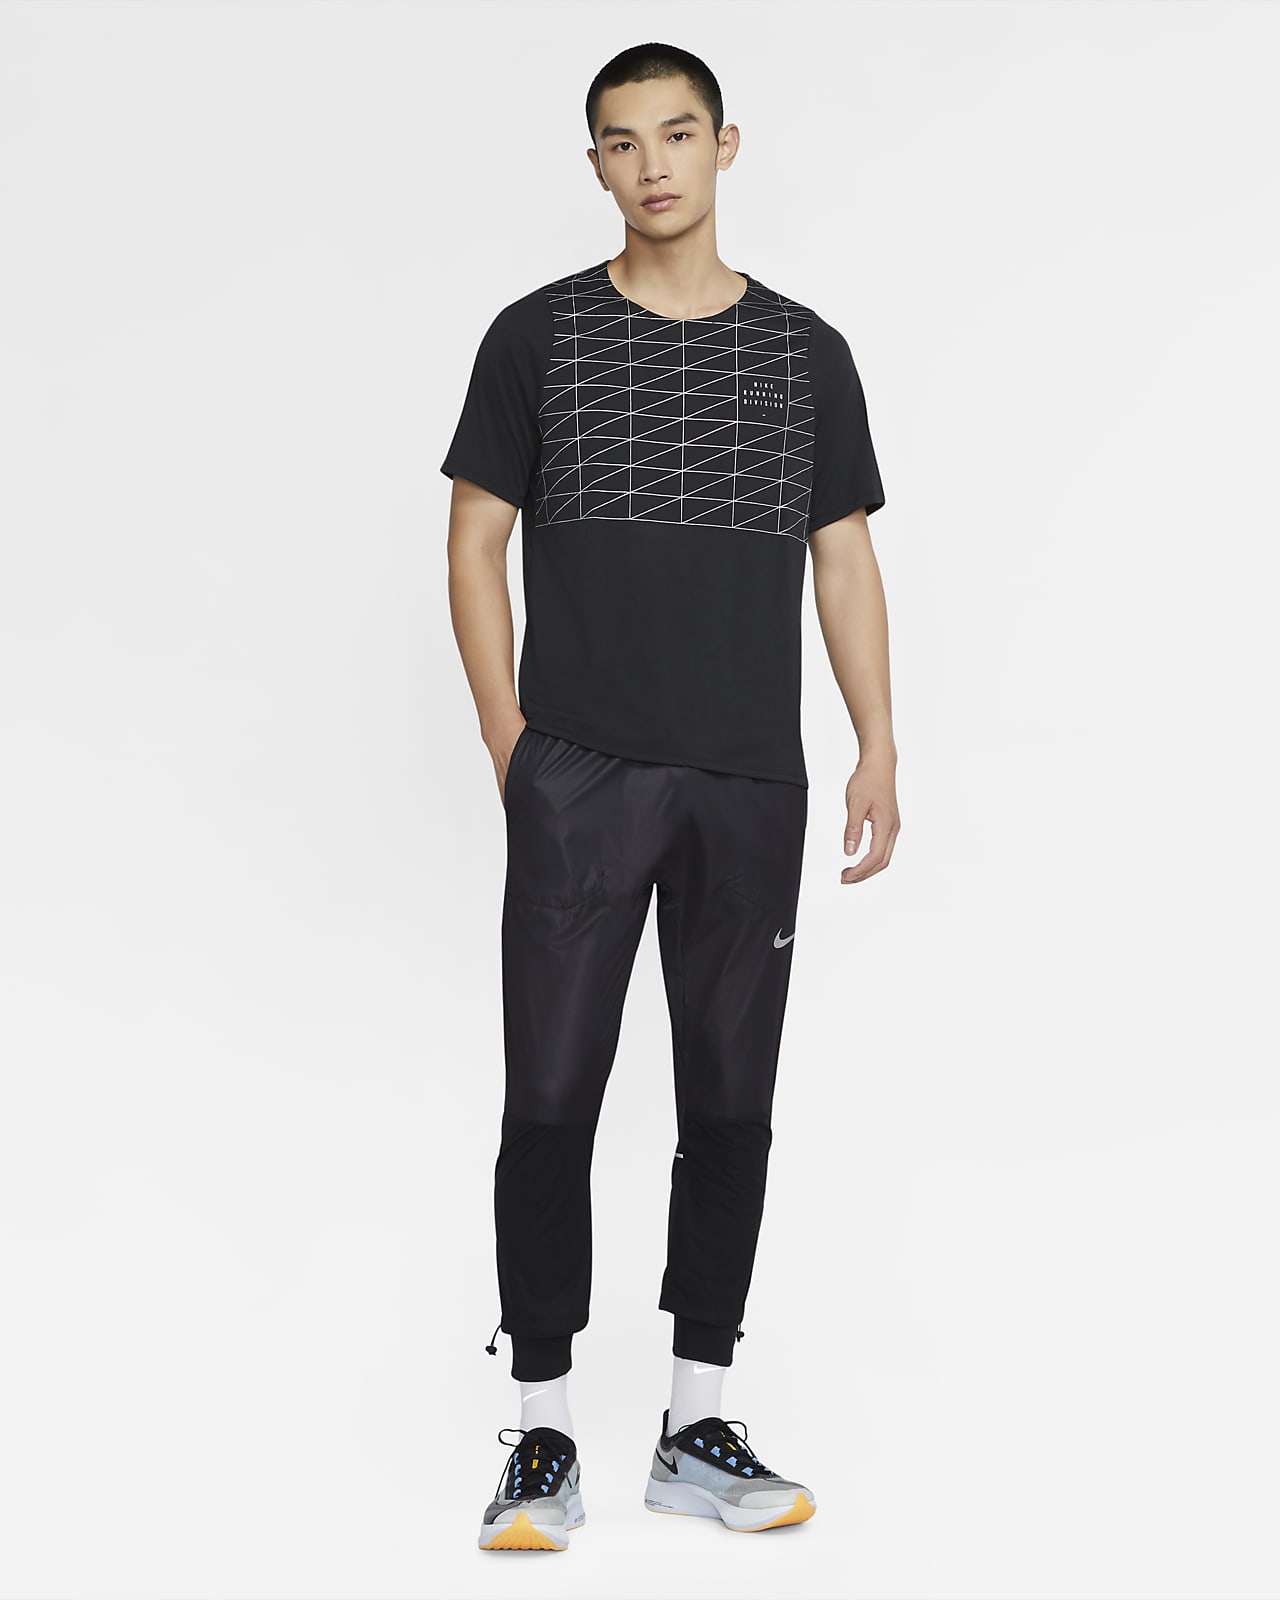 Nike公式 ナイキ スウィフト シールド メンズ ランニングパンツ オンラインストア 通販サイト